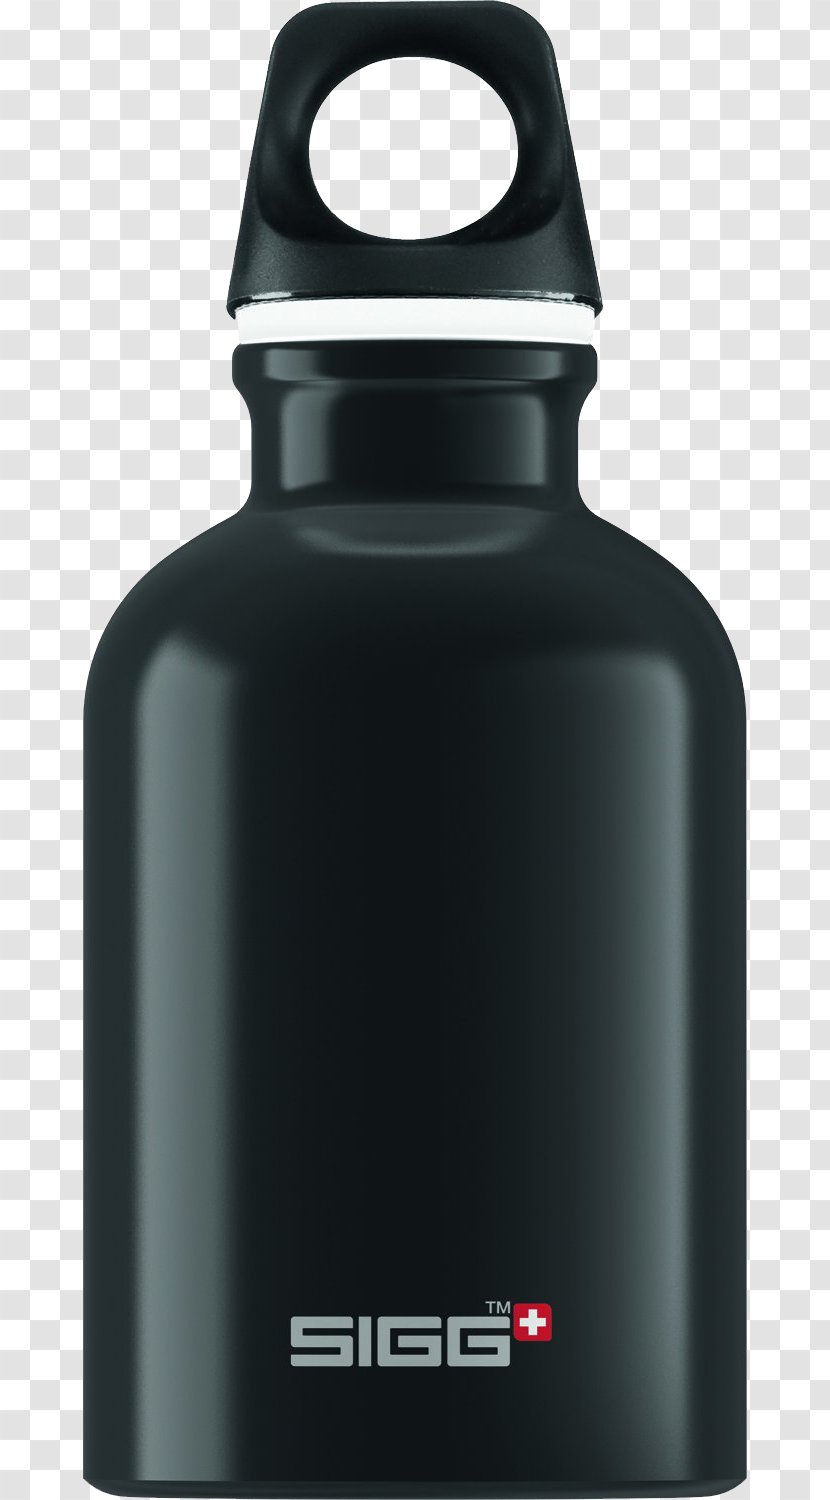 Sigg Water Bottle Cap - Bisphenol A - Leakproof Design Switzerland Transparent PNG